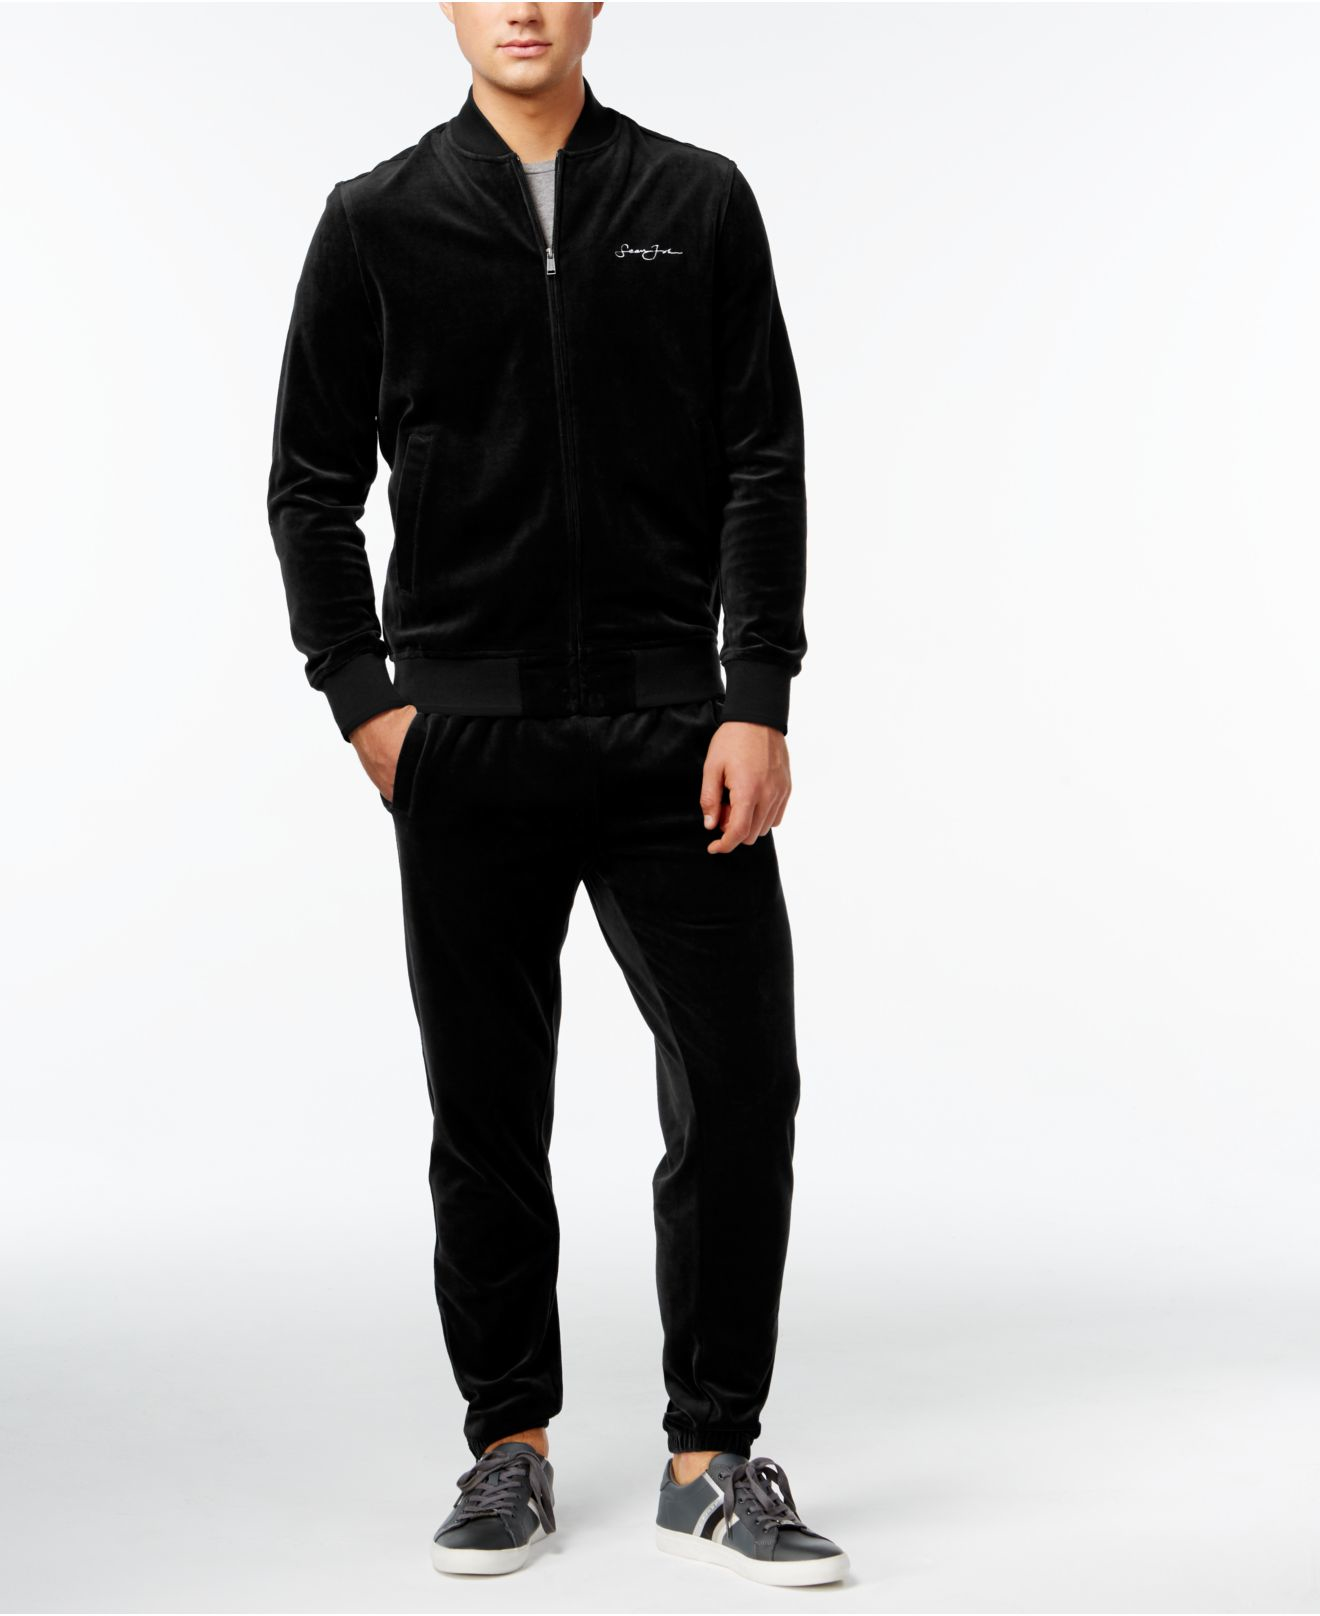 Sean John Big & Tall Limited Addition Velour Set in Black for Men